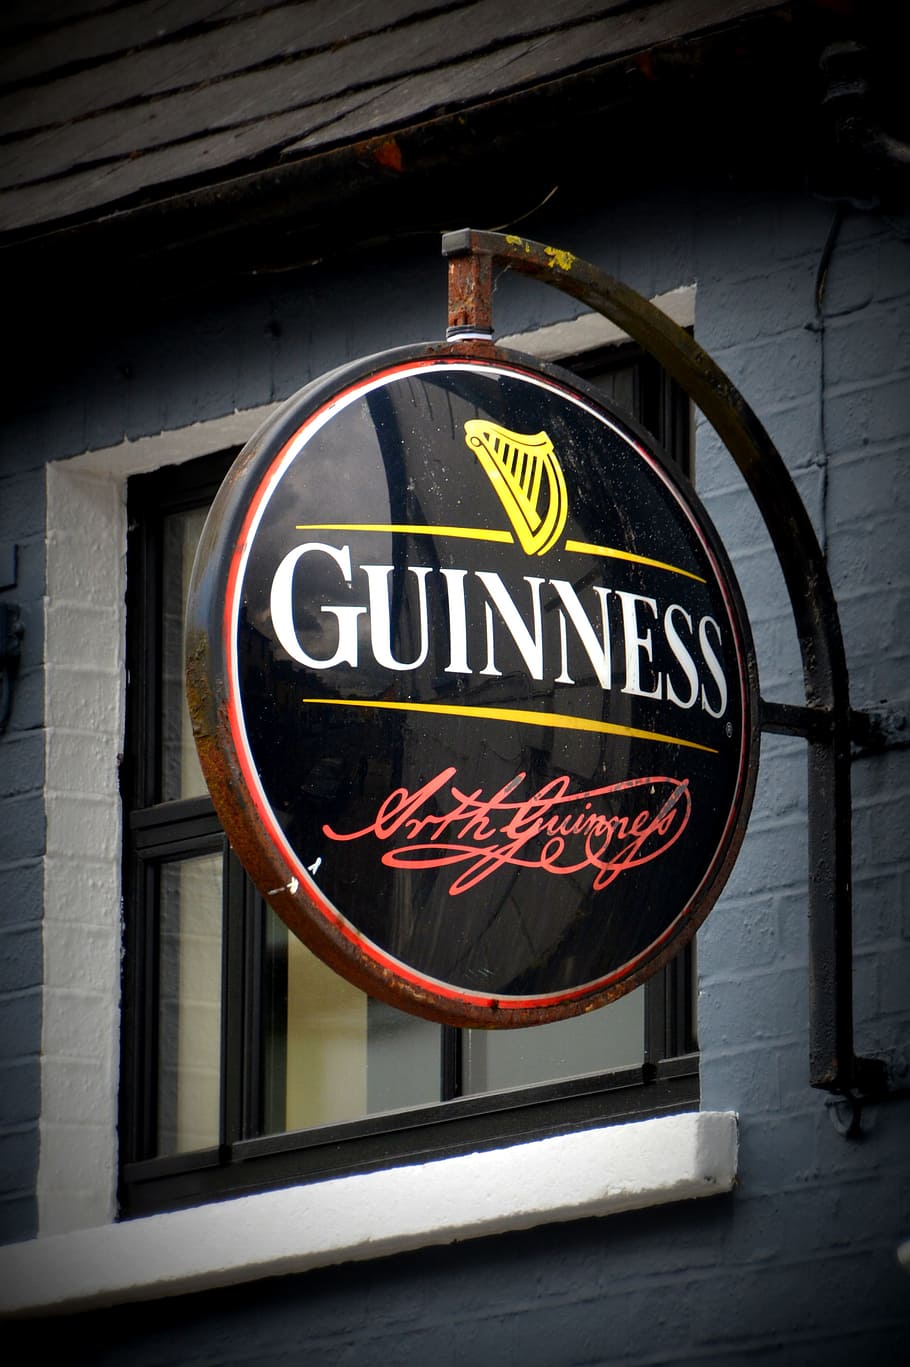 Guinness signage, Ireland, Irish, Pub, Beer, Bar, text, outdoors